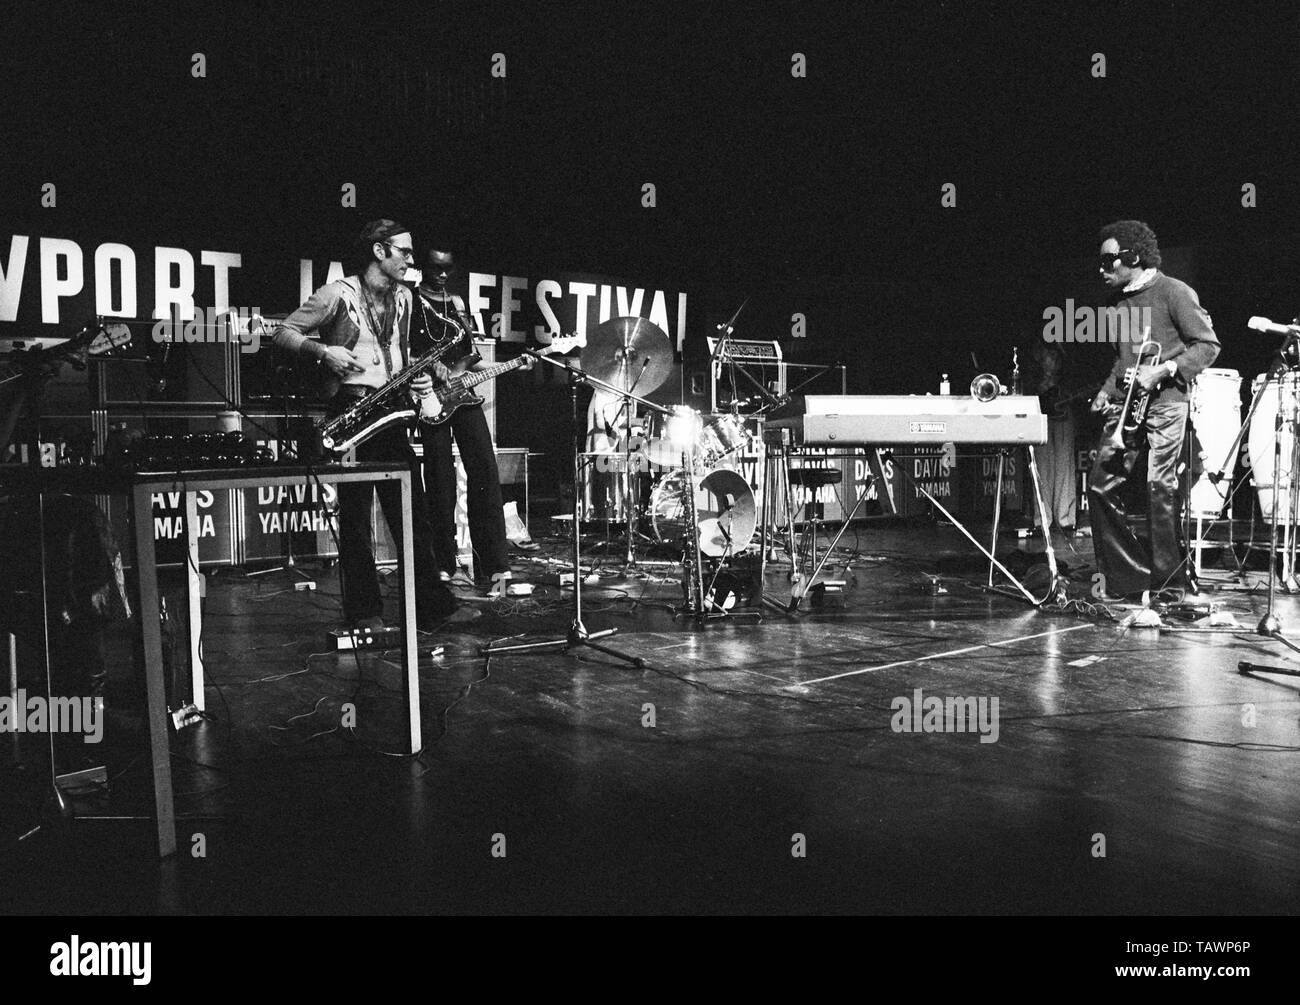 ROTTERDAM, HOLLAND - OCTOBER 29: Miles Davis performs live on stage at De Doelen Hall, Rotterdam, Holland on October 29 1971 (Photo by Gijsbert Hanekroot) Stock Photo